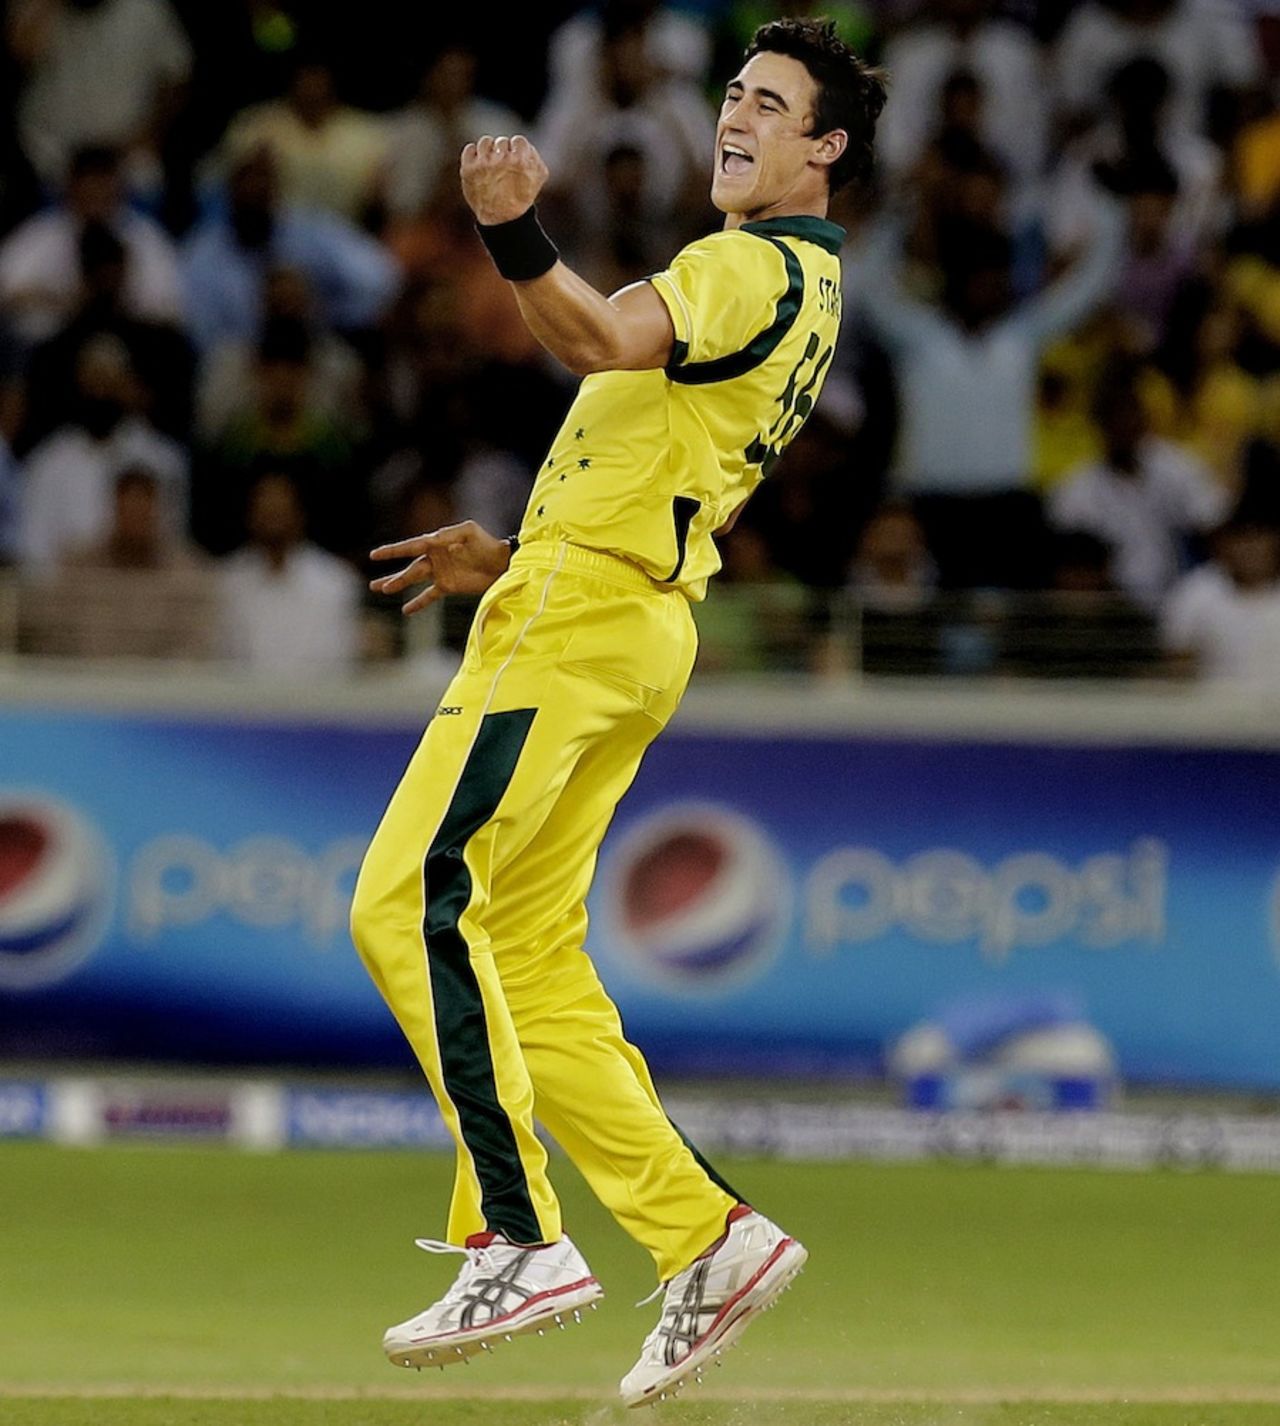 Mitchell Starc is pumped after taking a wicket, Pakistan v Australia, 3rd T20I, Dubai, September 10, 2012